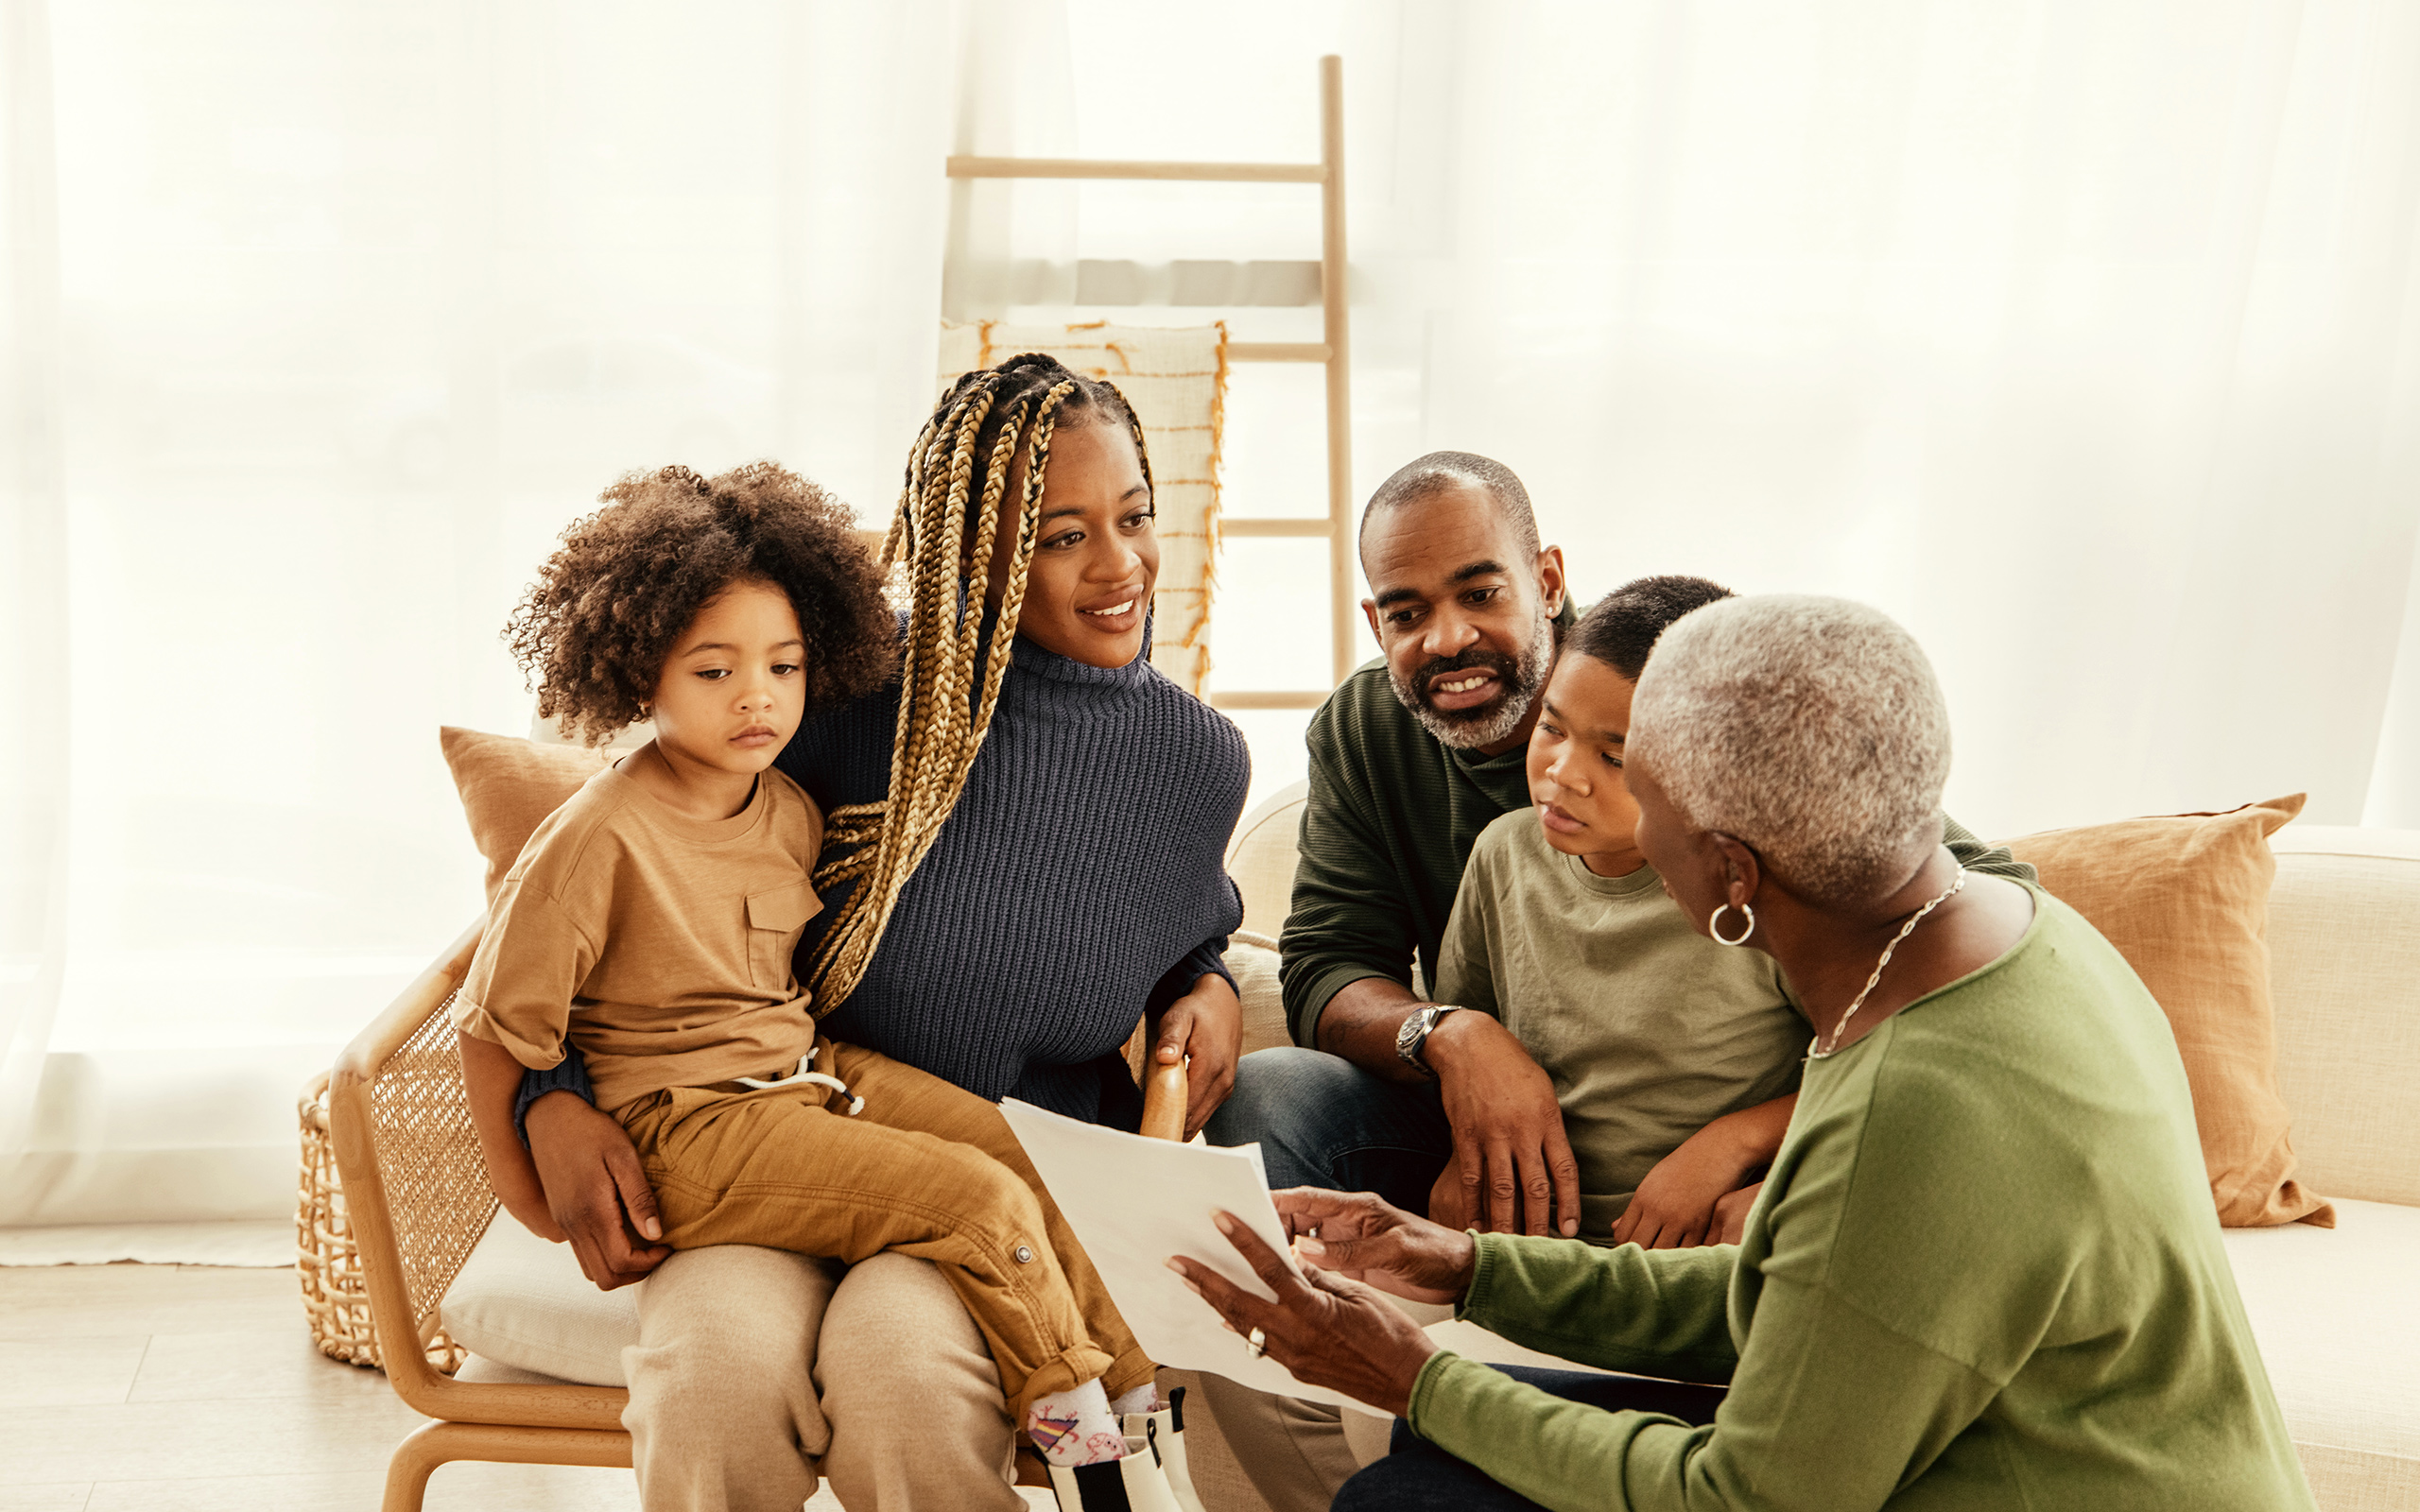 An older woman talks to her children and grandchildren